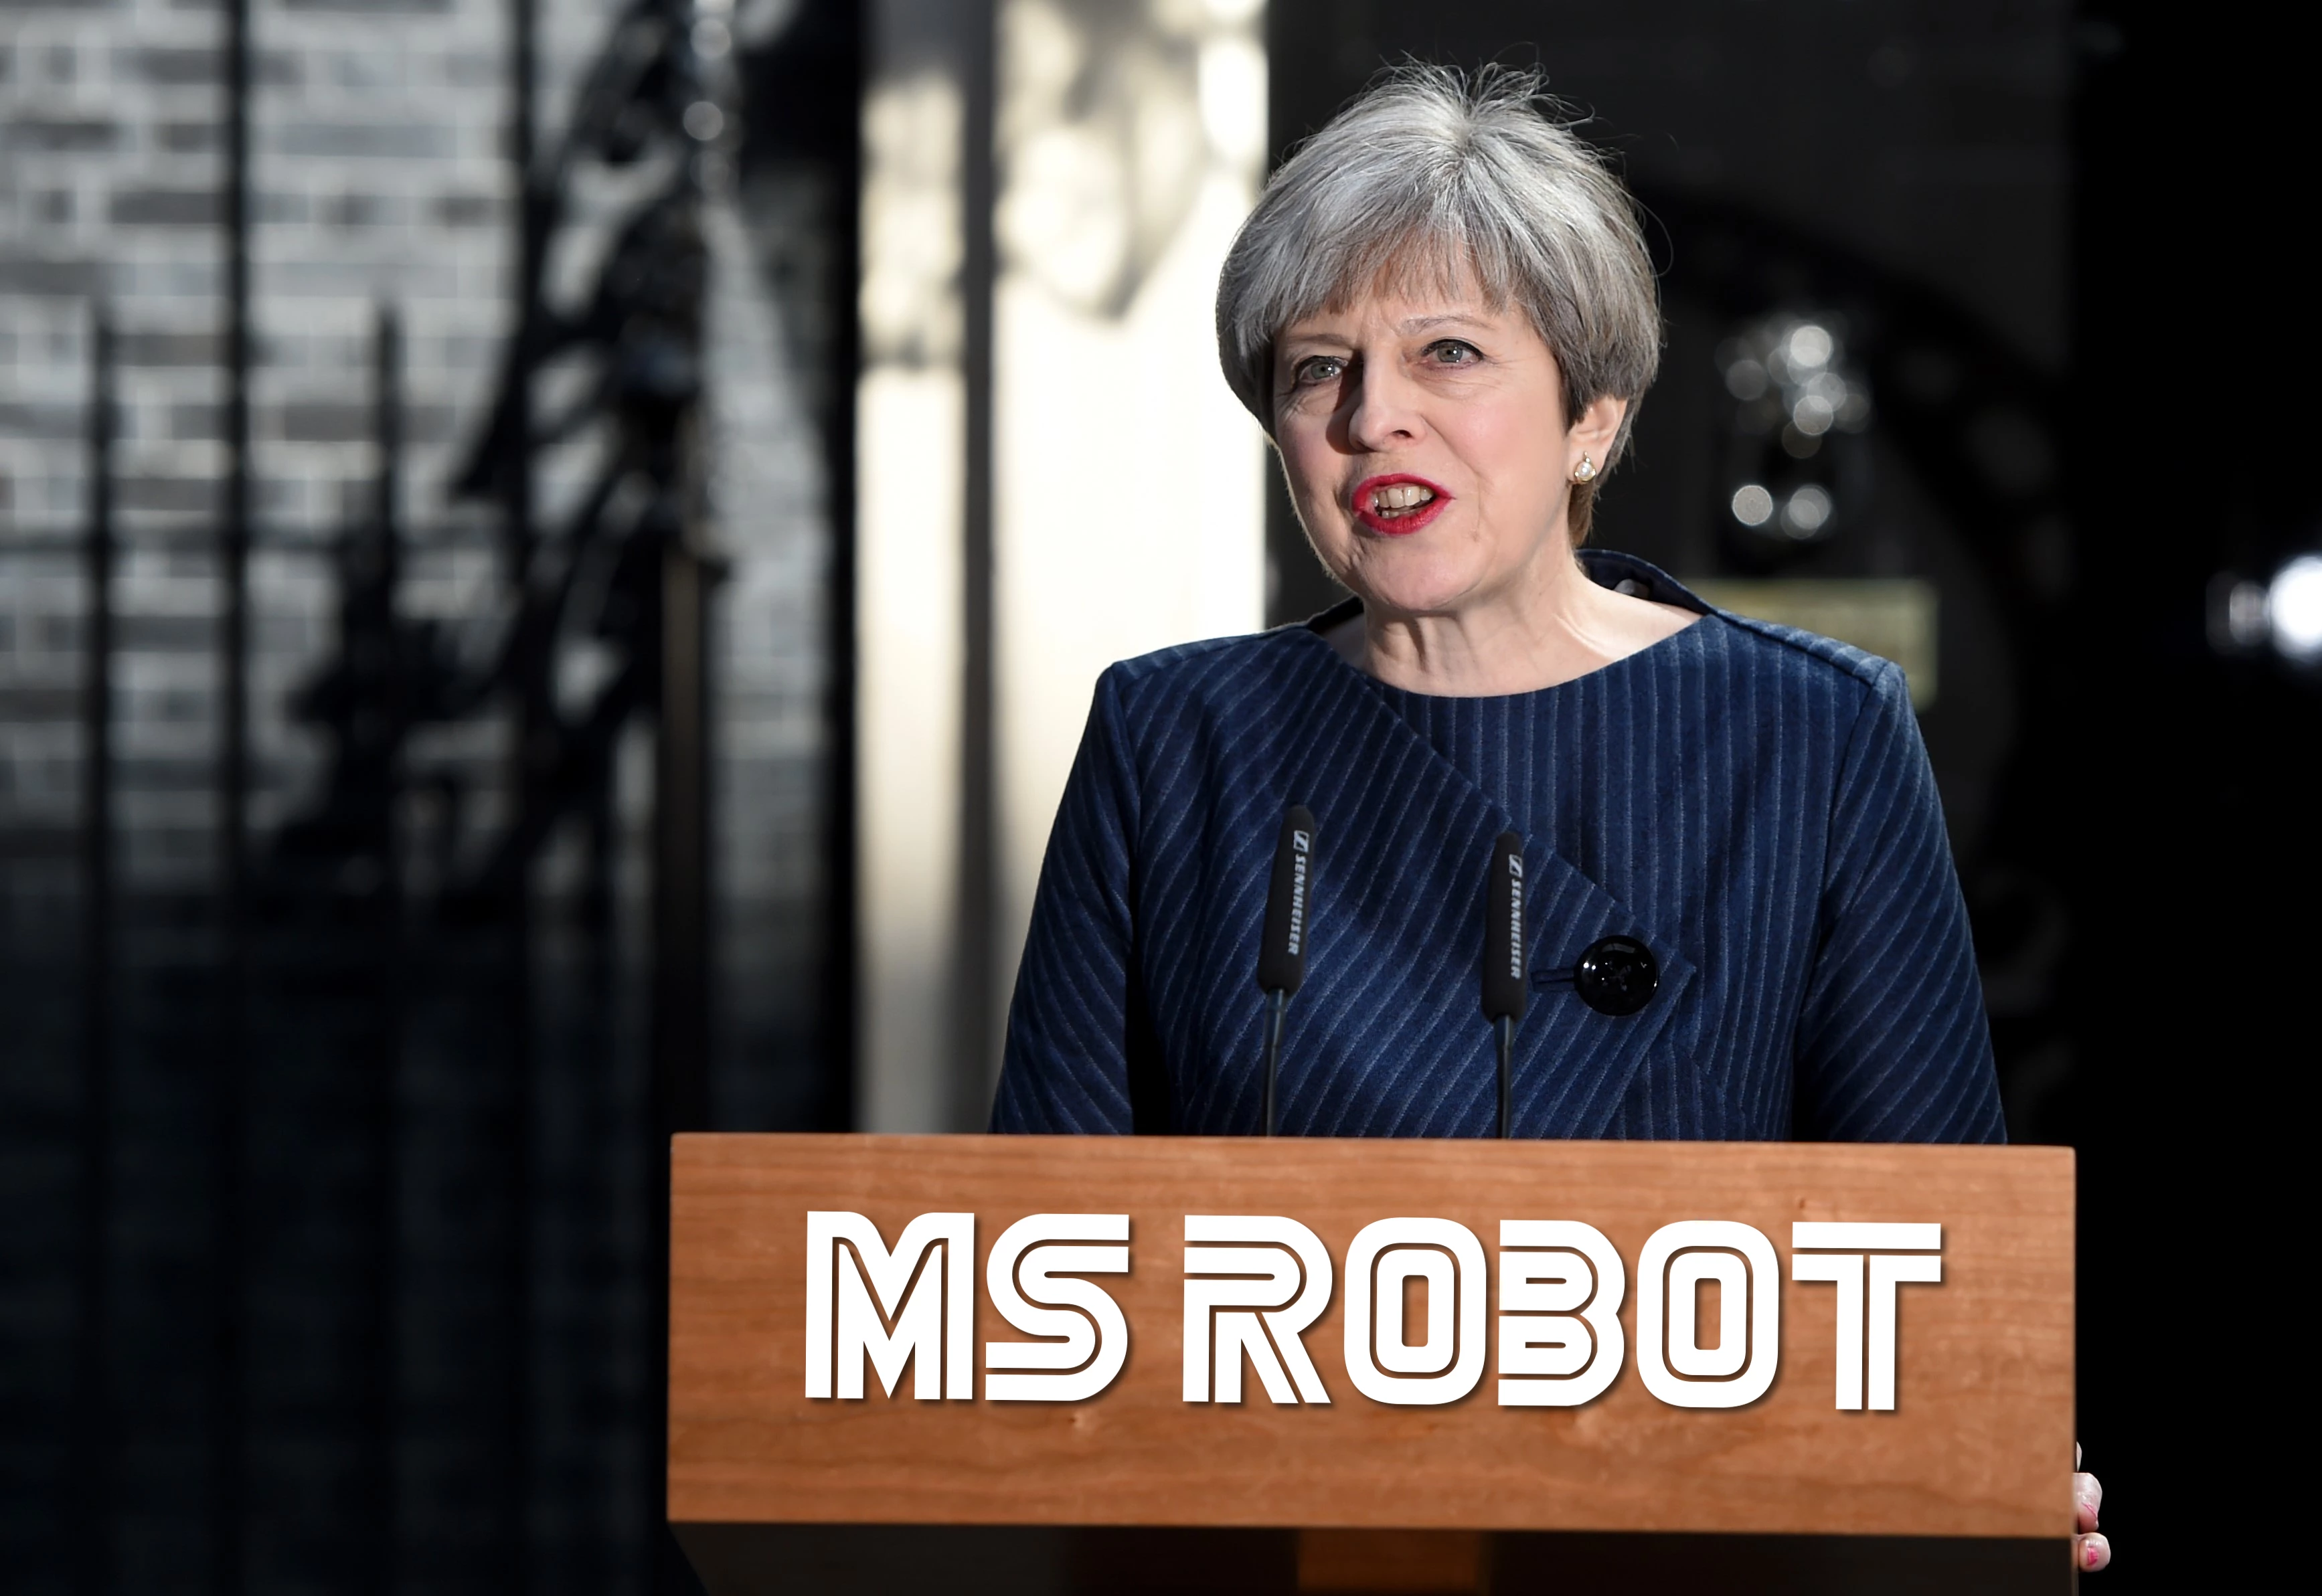 Theresa May is Ms Robot